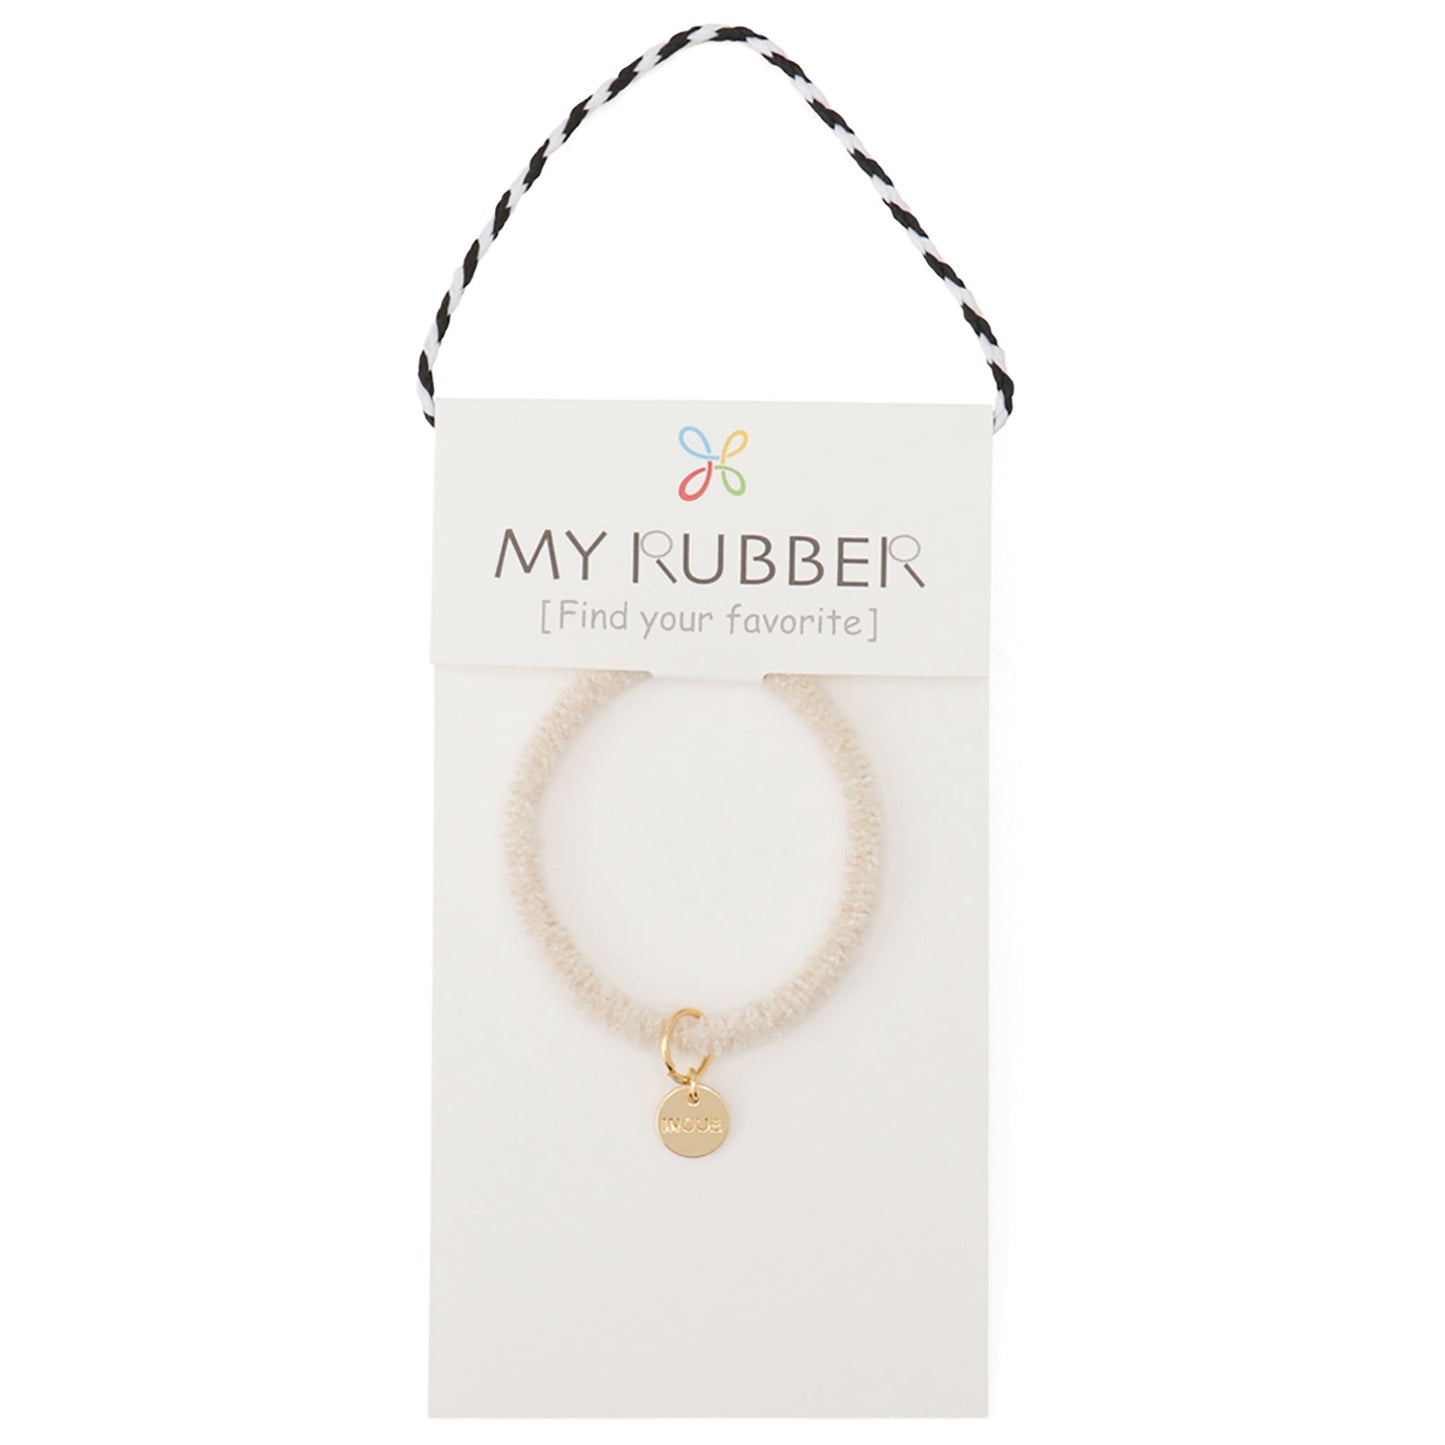 [MyRubber] モコリングS アイボリー / ヘアアクセサリー ヘアゴム 髪が細い 小さめ ヘアアレンジ カジュアル ミニサイズ